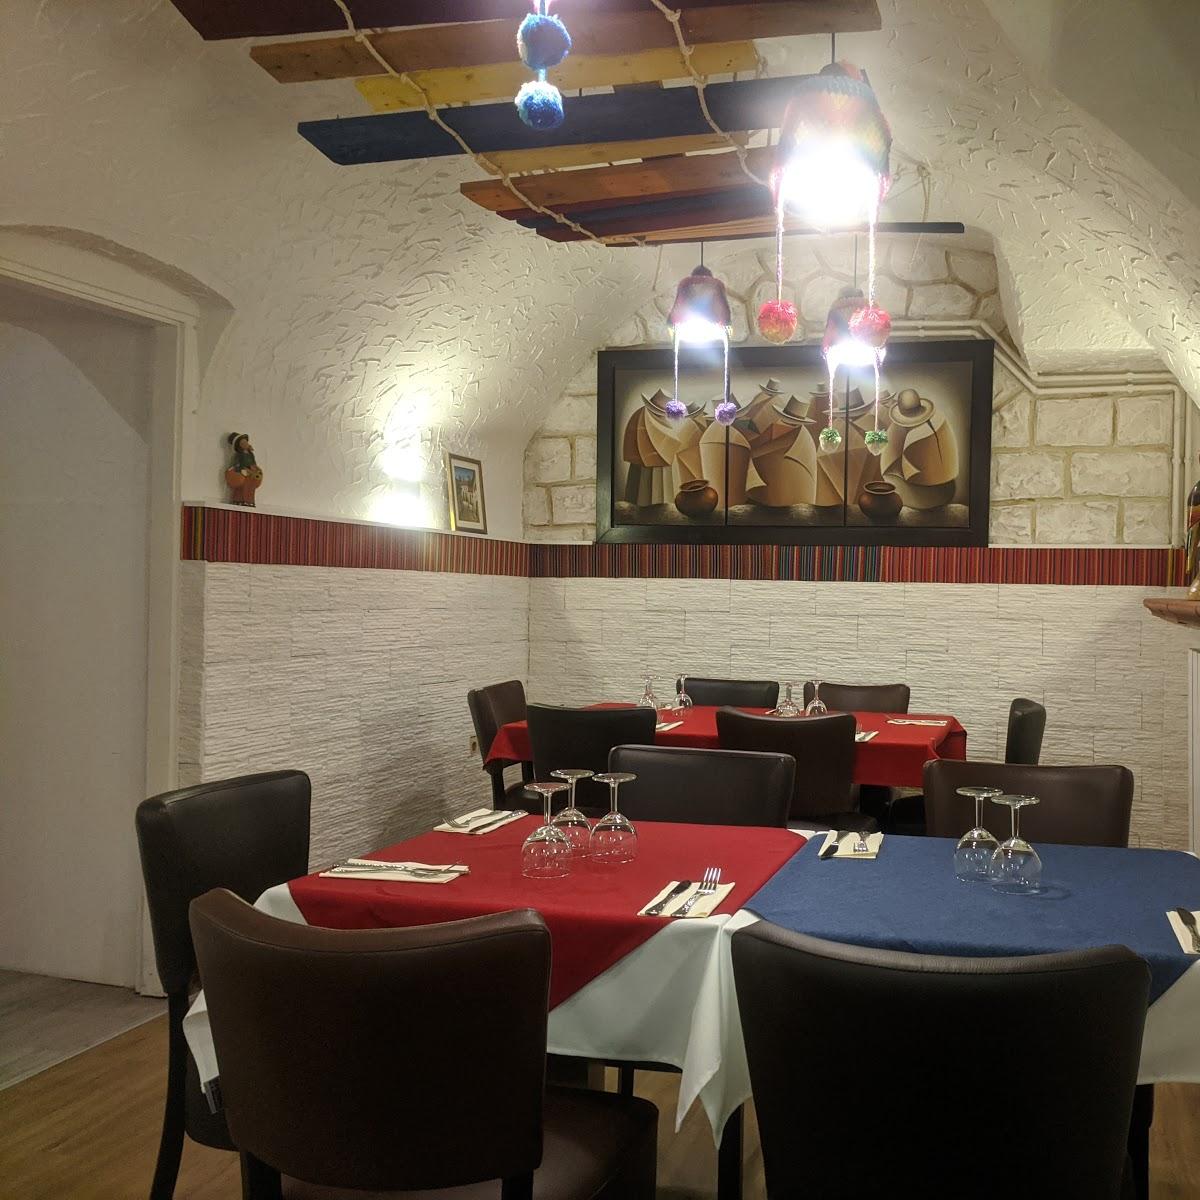 Restaurant "Restaurant Huacas Peru" in  Wiesbaden